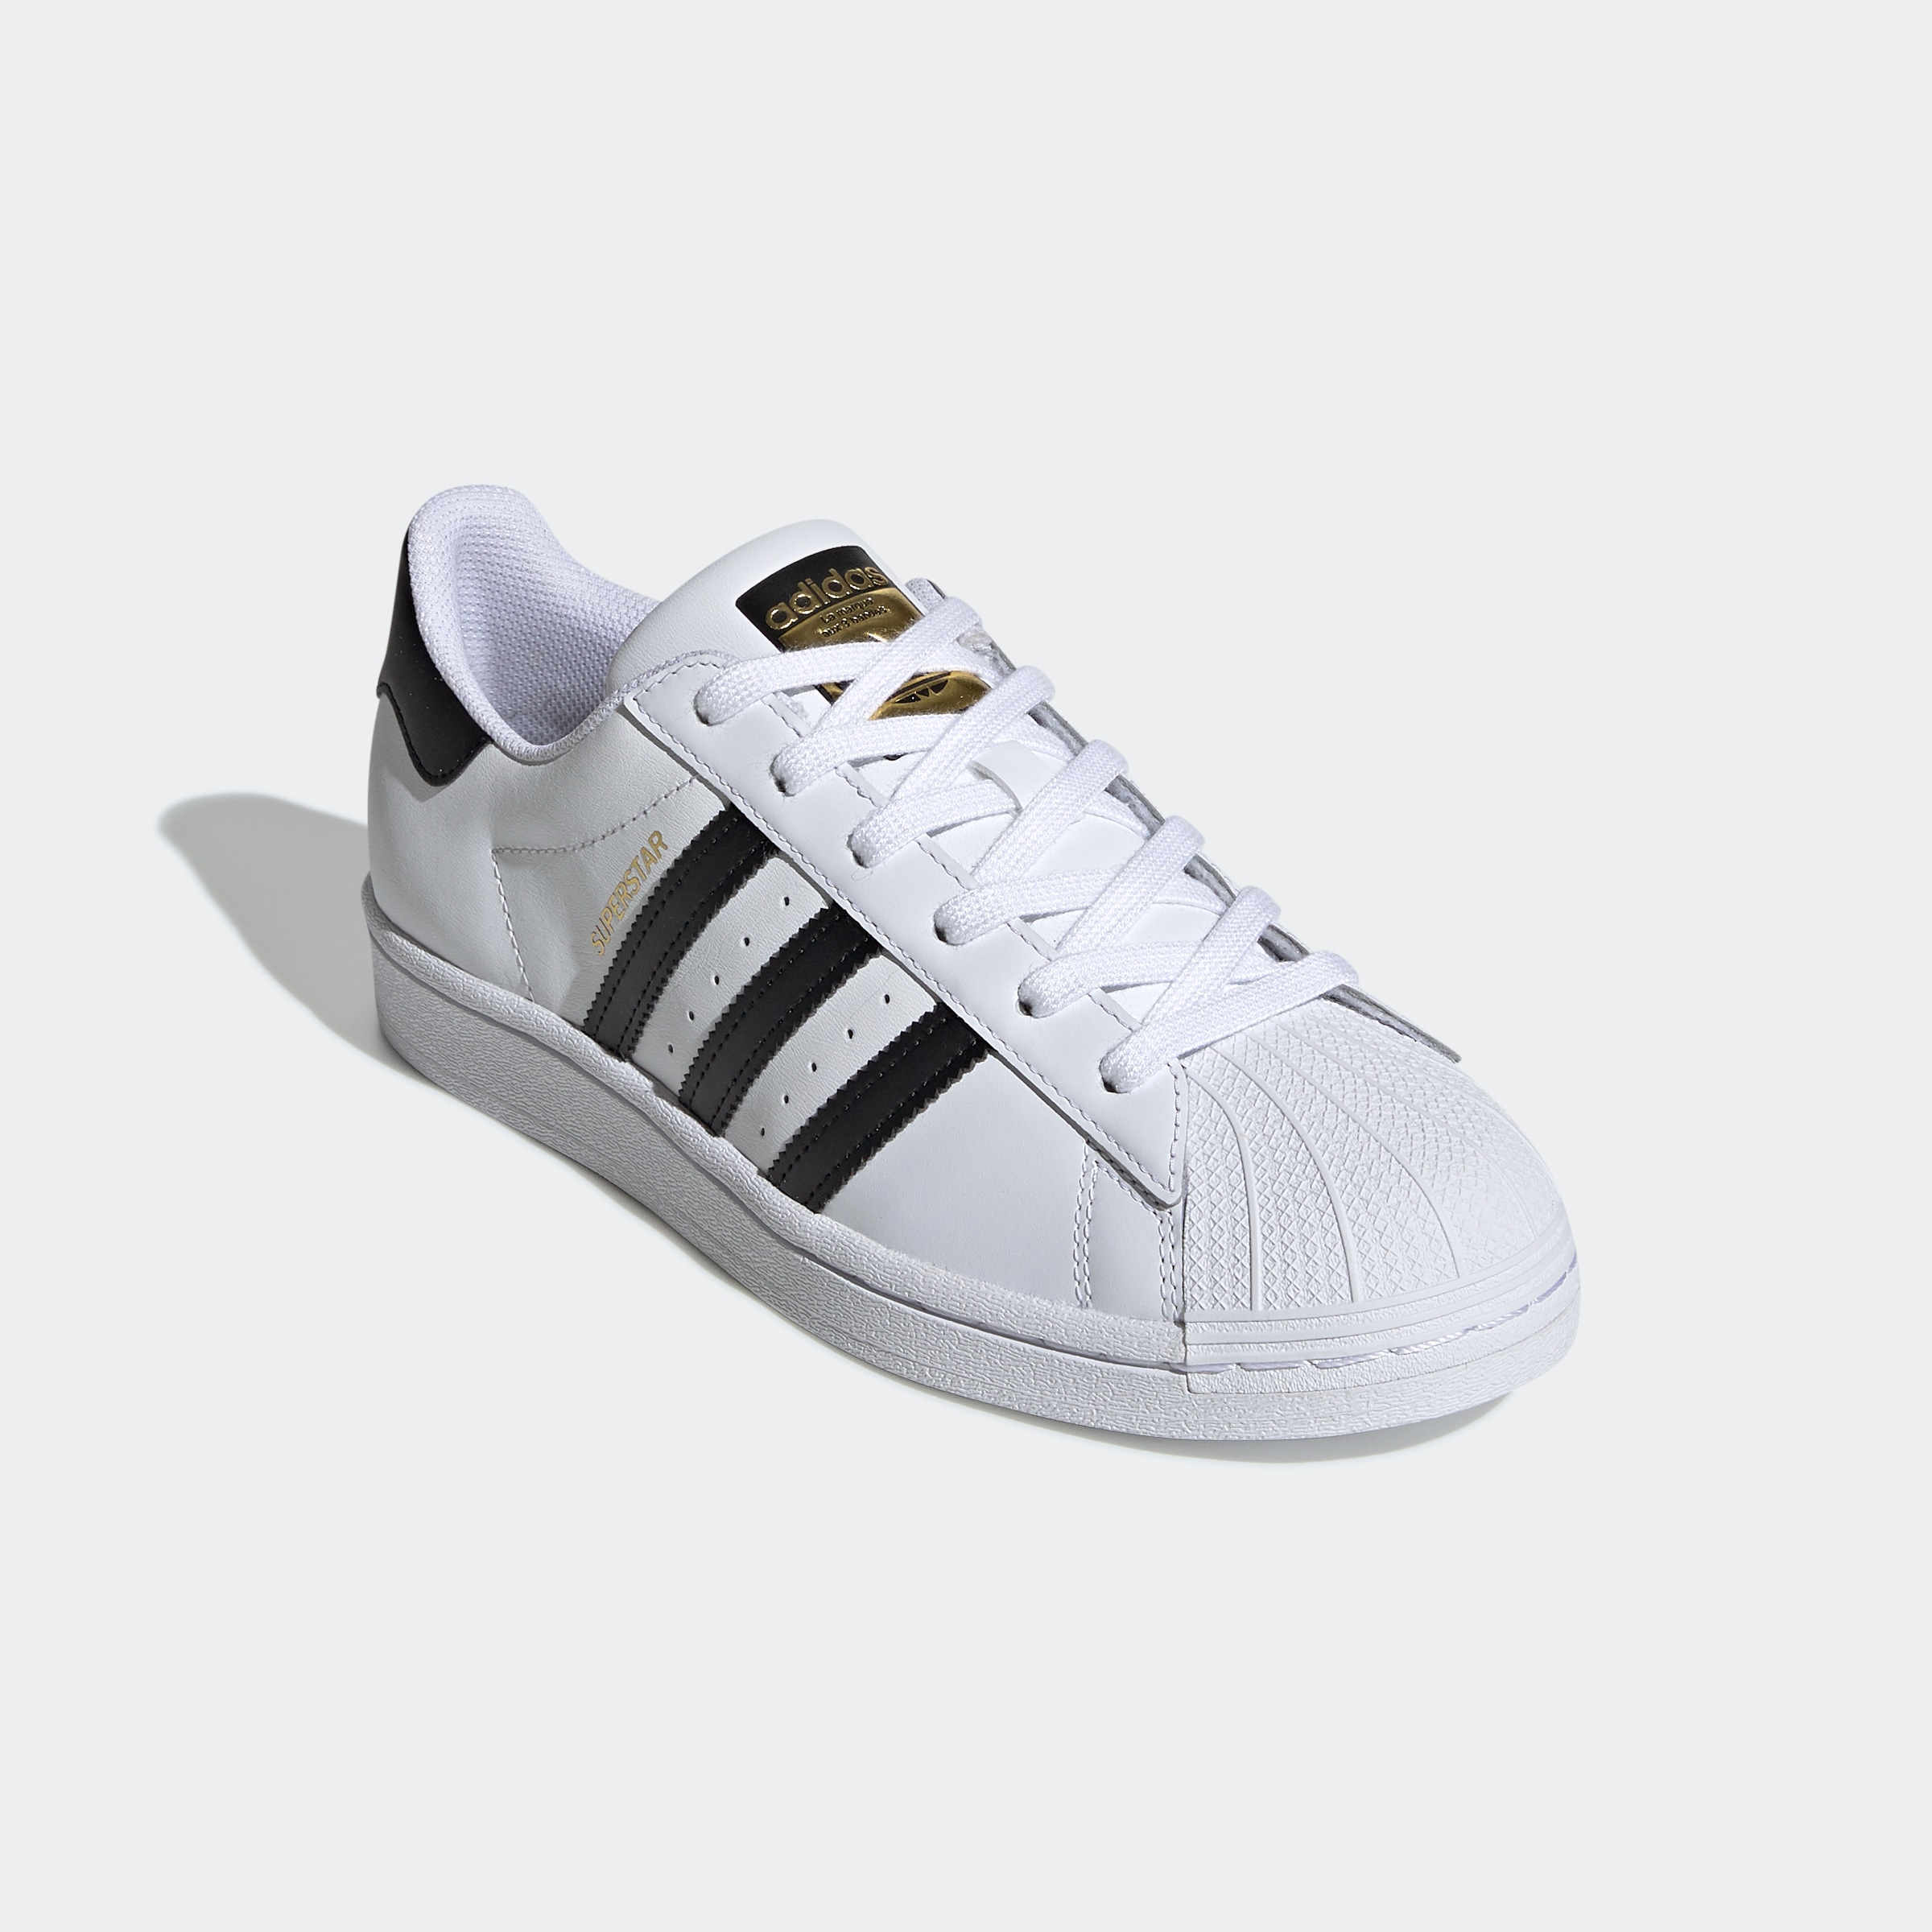 adidas Damen Superstar W Sneaker, FTWR White/Core Black/FTWR White, 36 EU